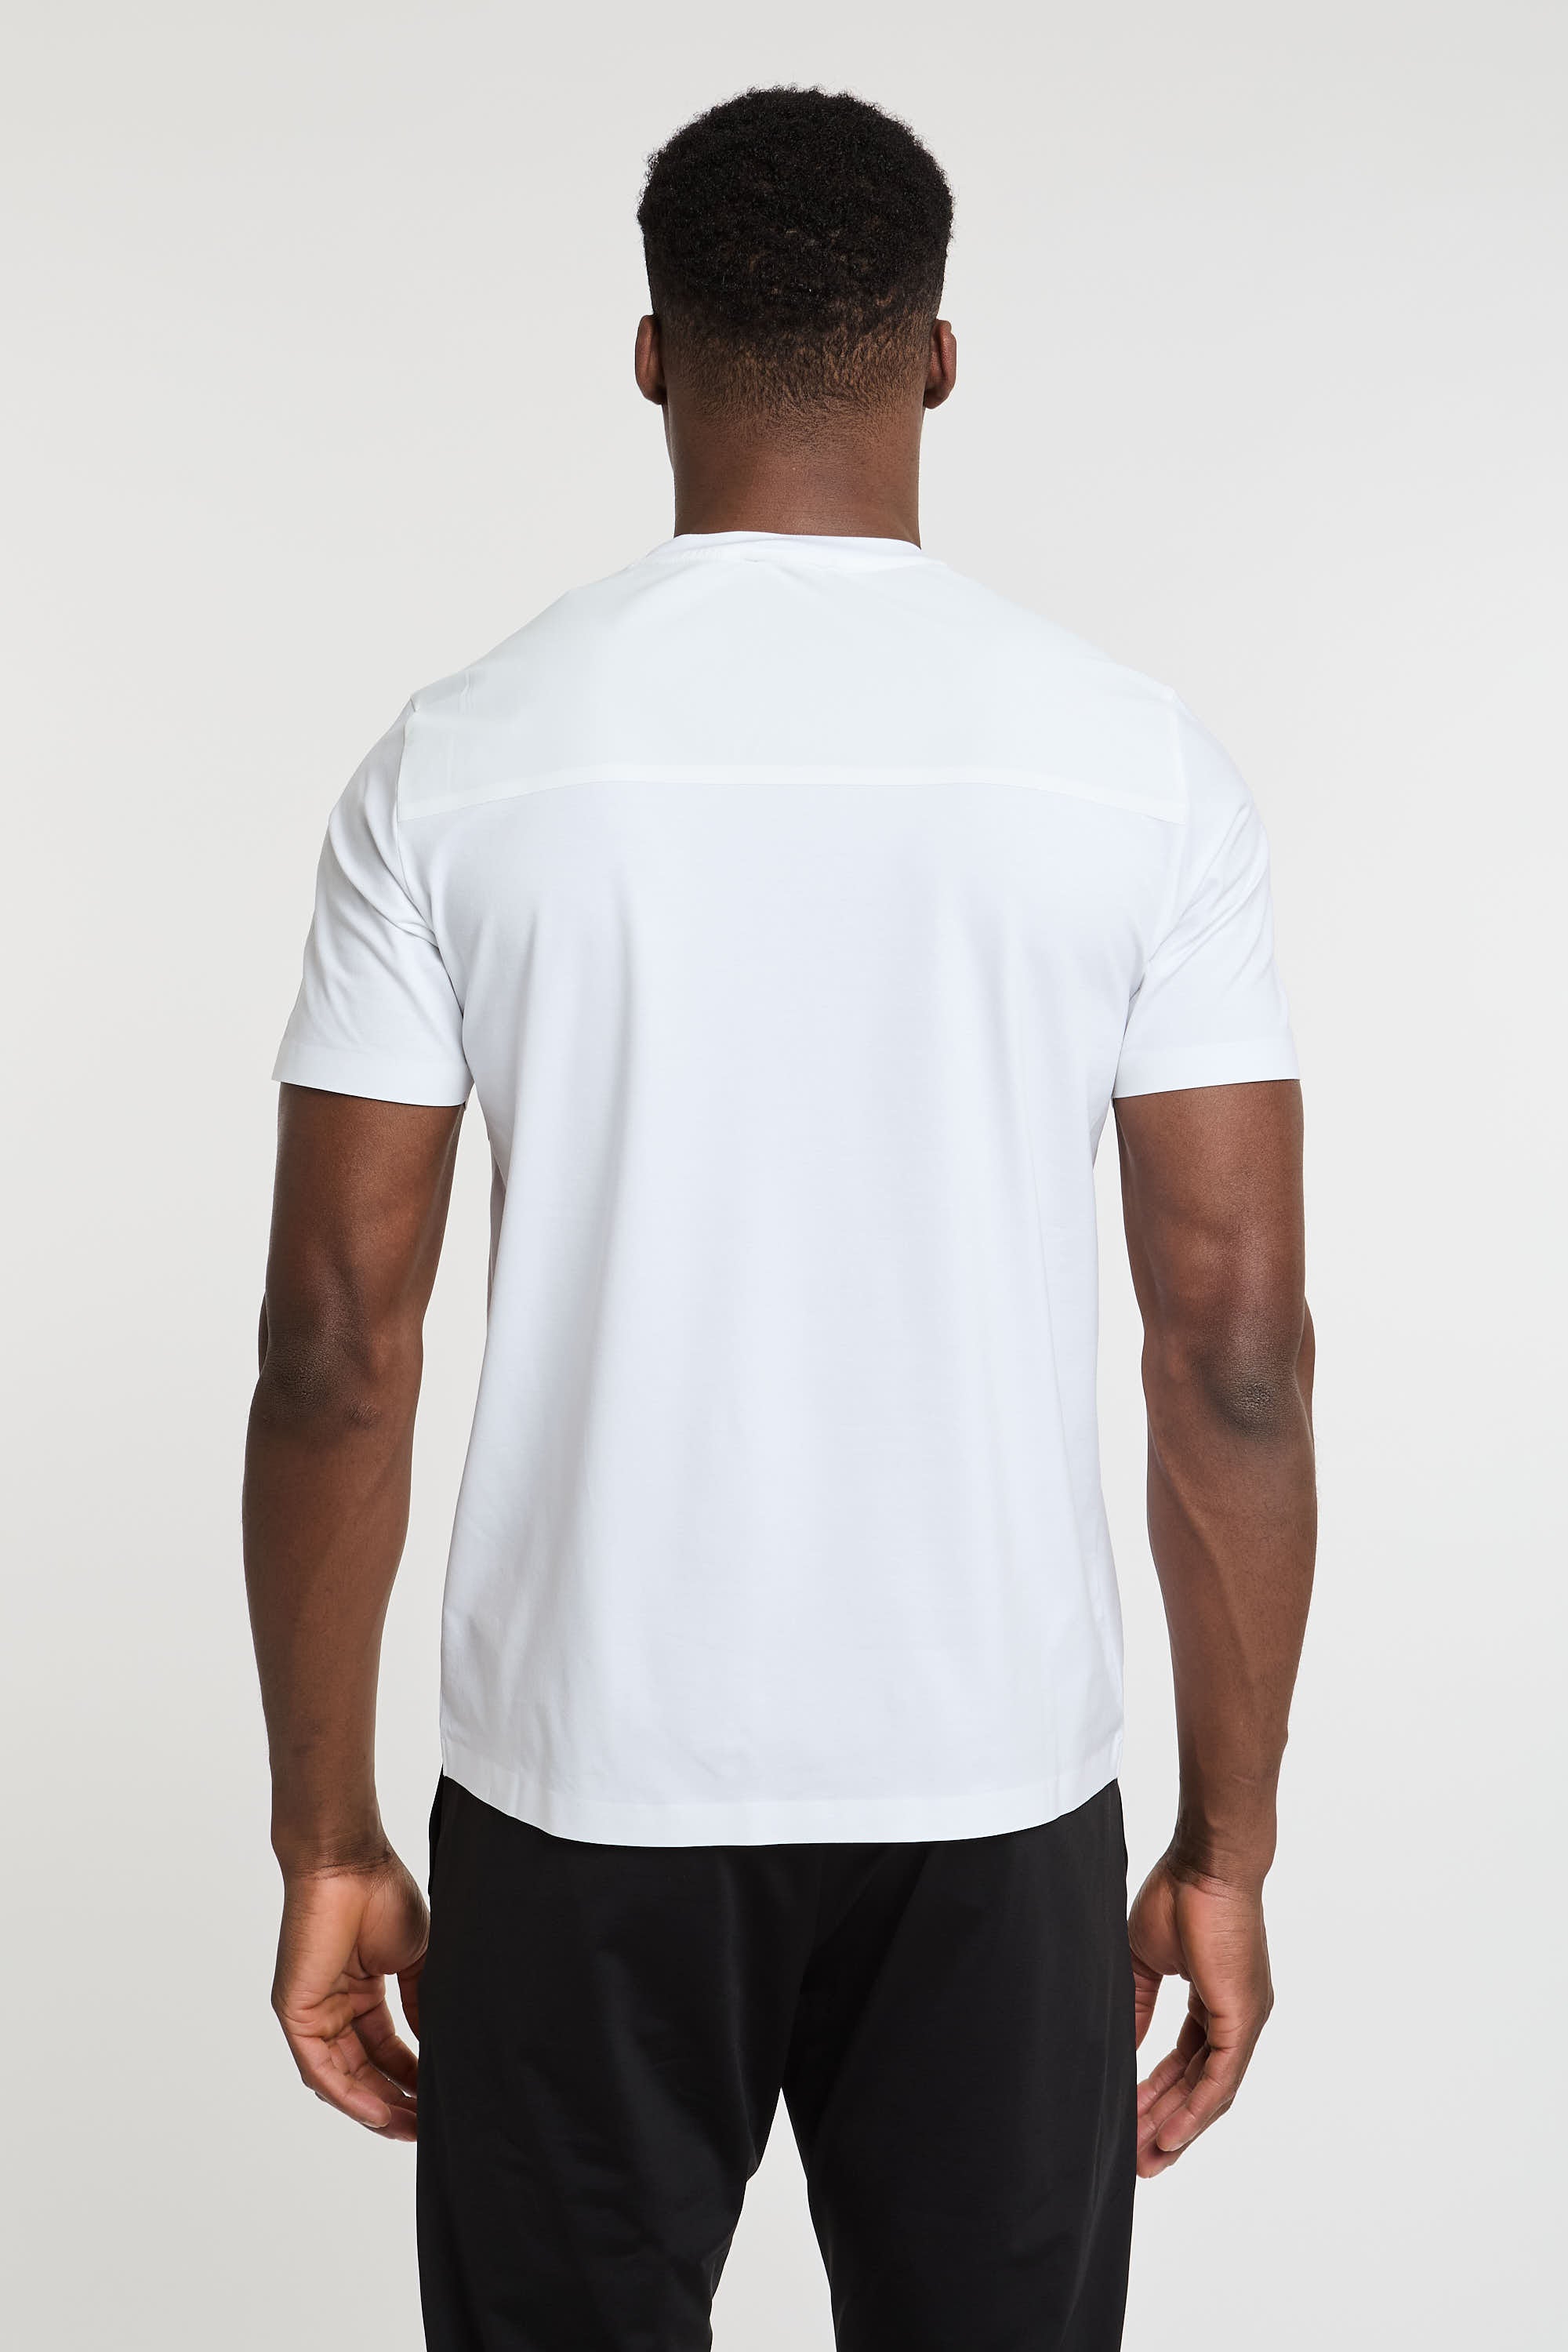 T-Shirt in superfine cotton stretch e light scuba-5